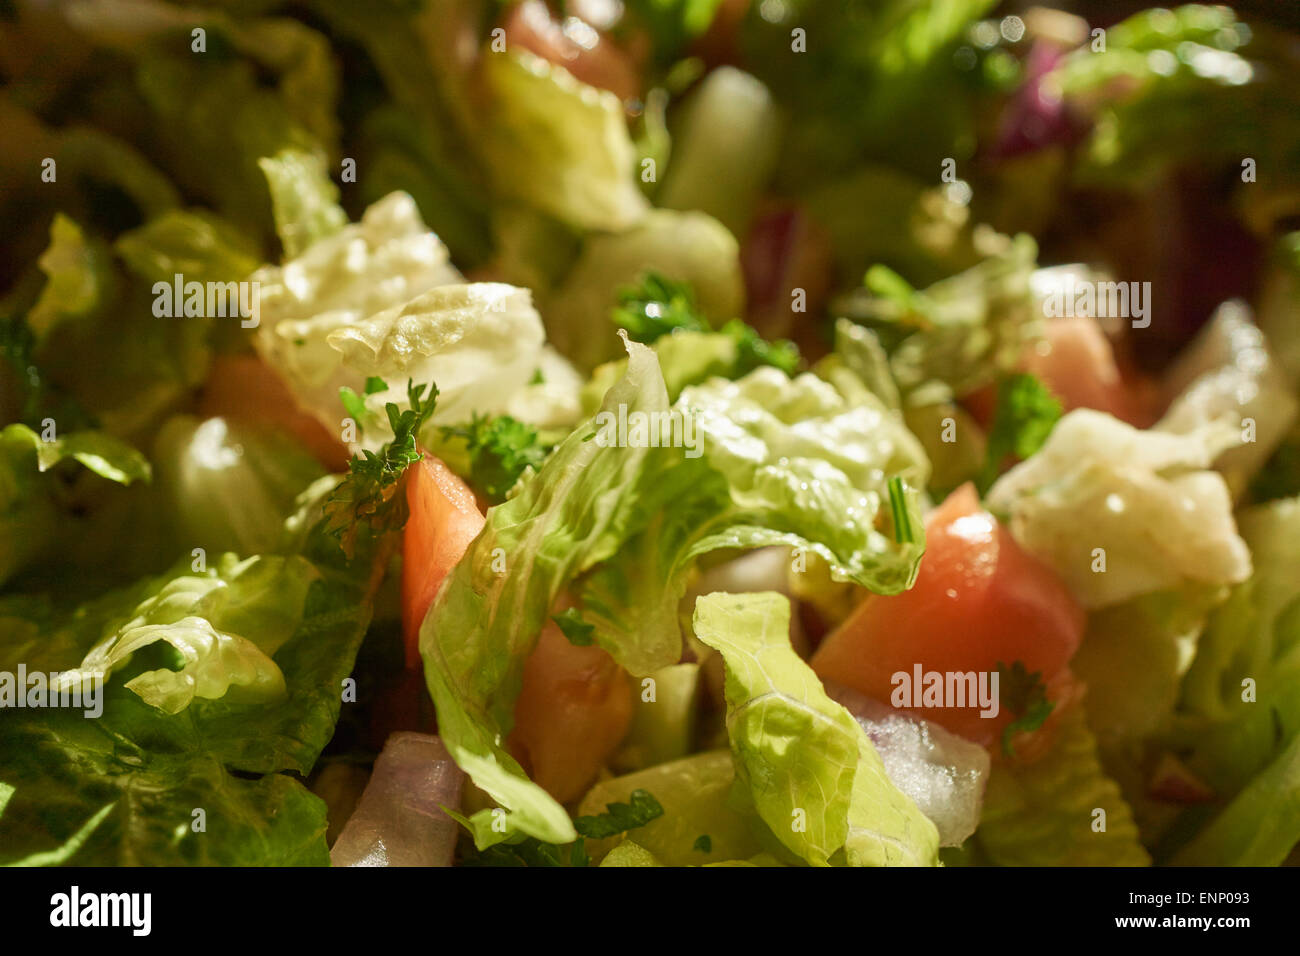 green salad with tomato Stock Photo